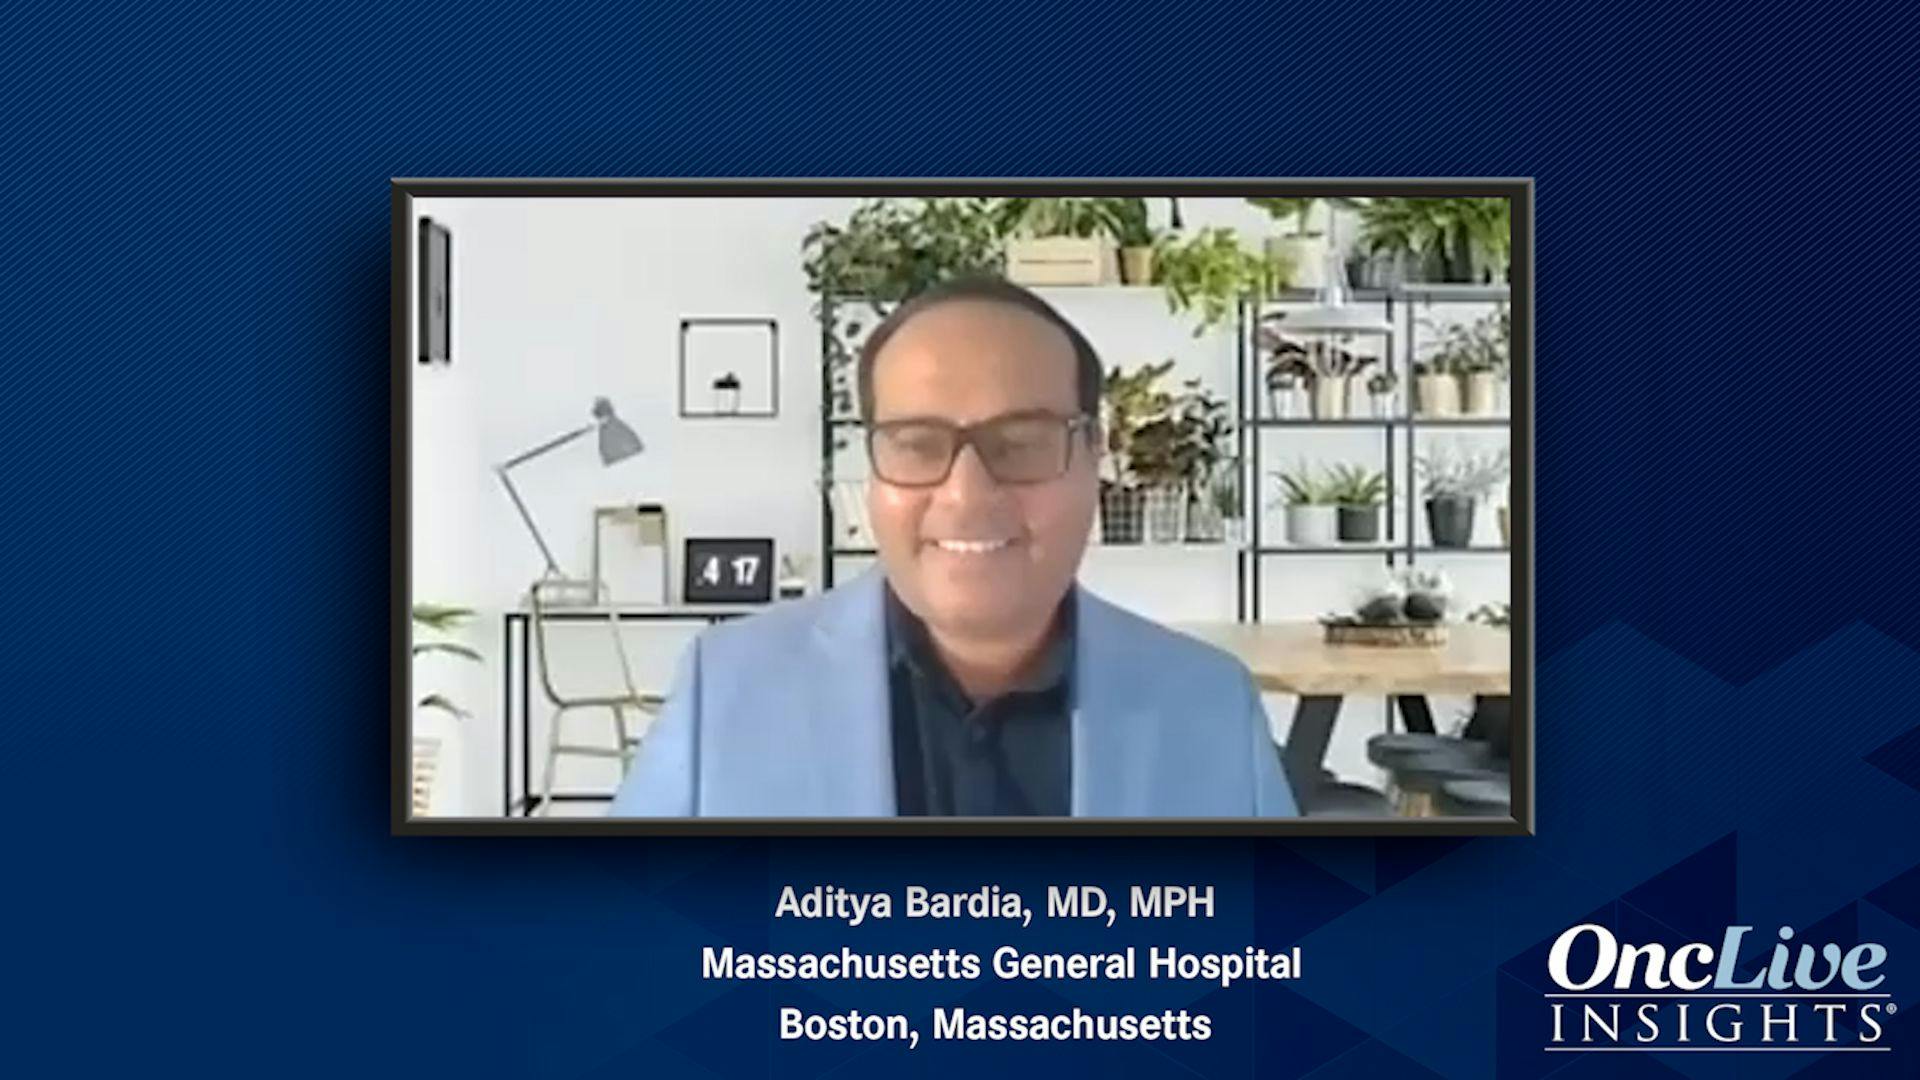 Aditya Bardia, MD, MPH, an expert on breast cancer